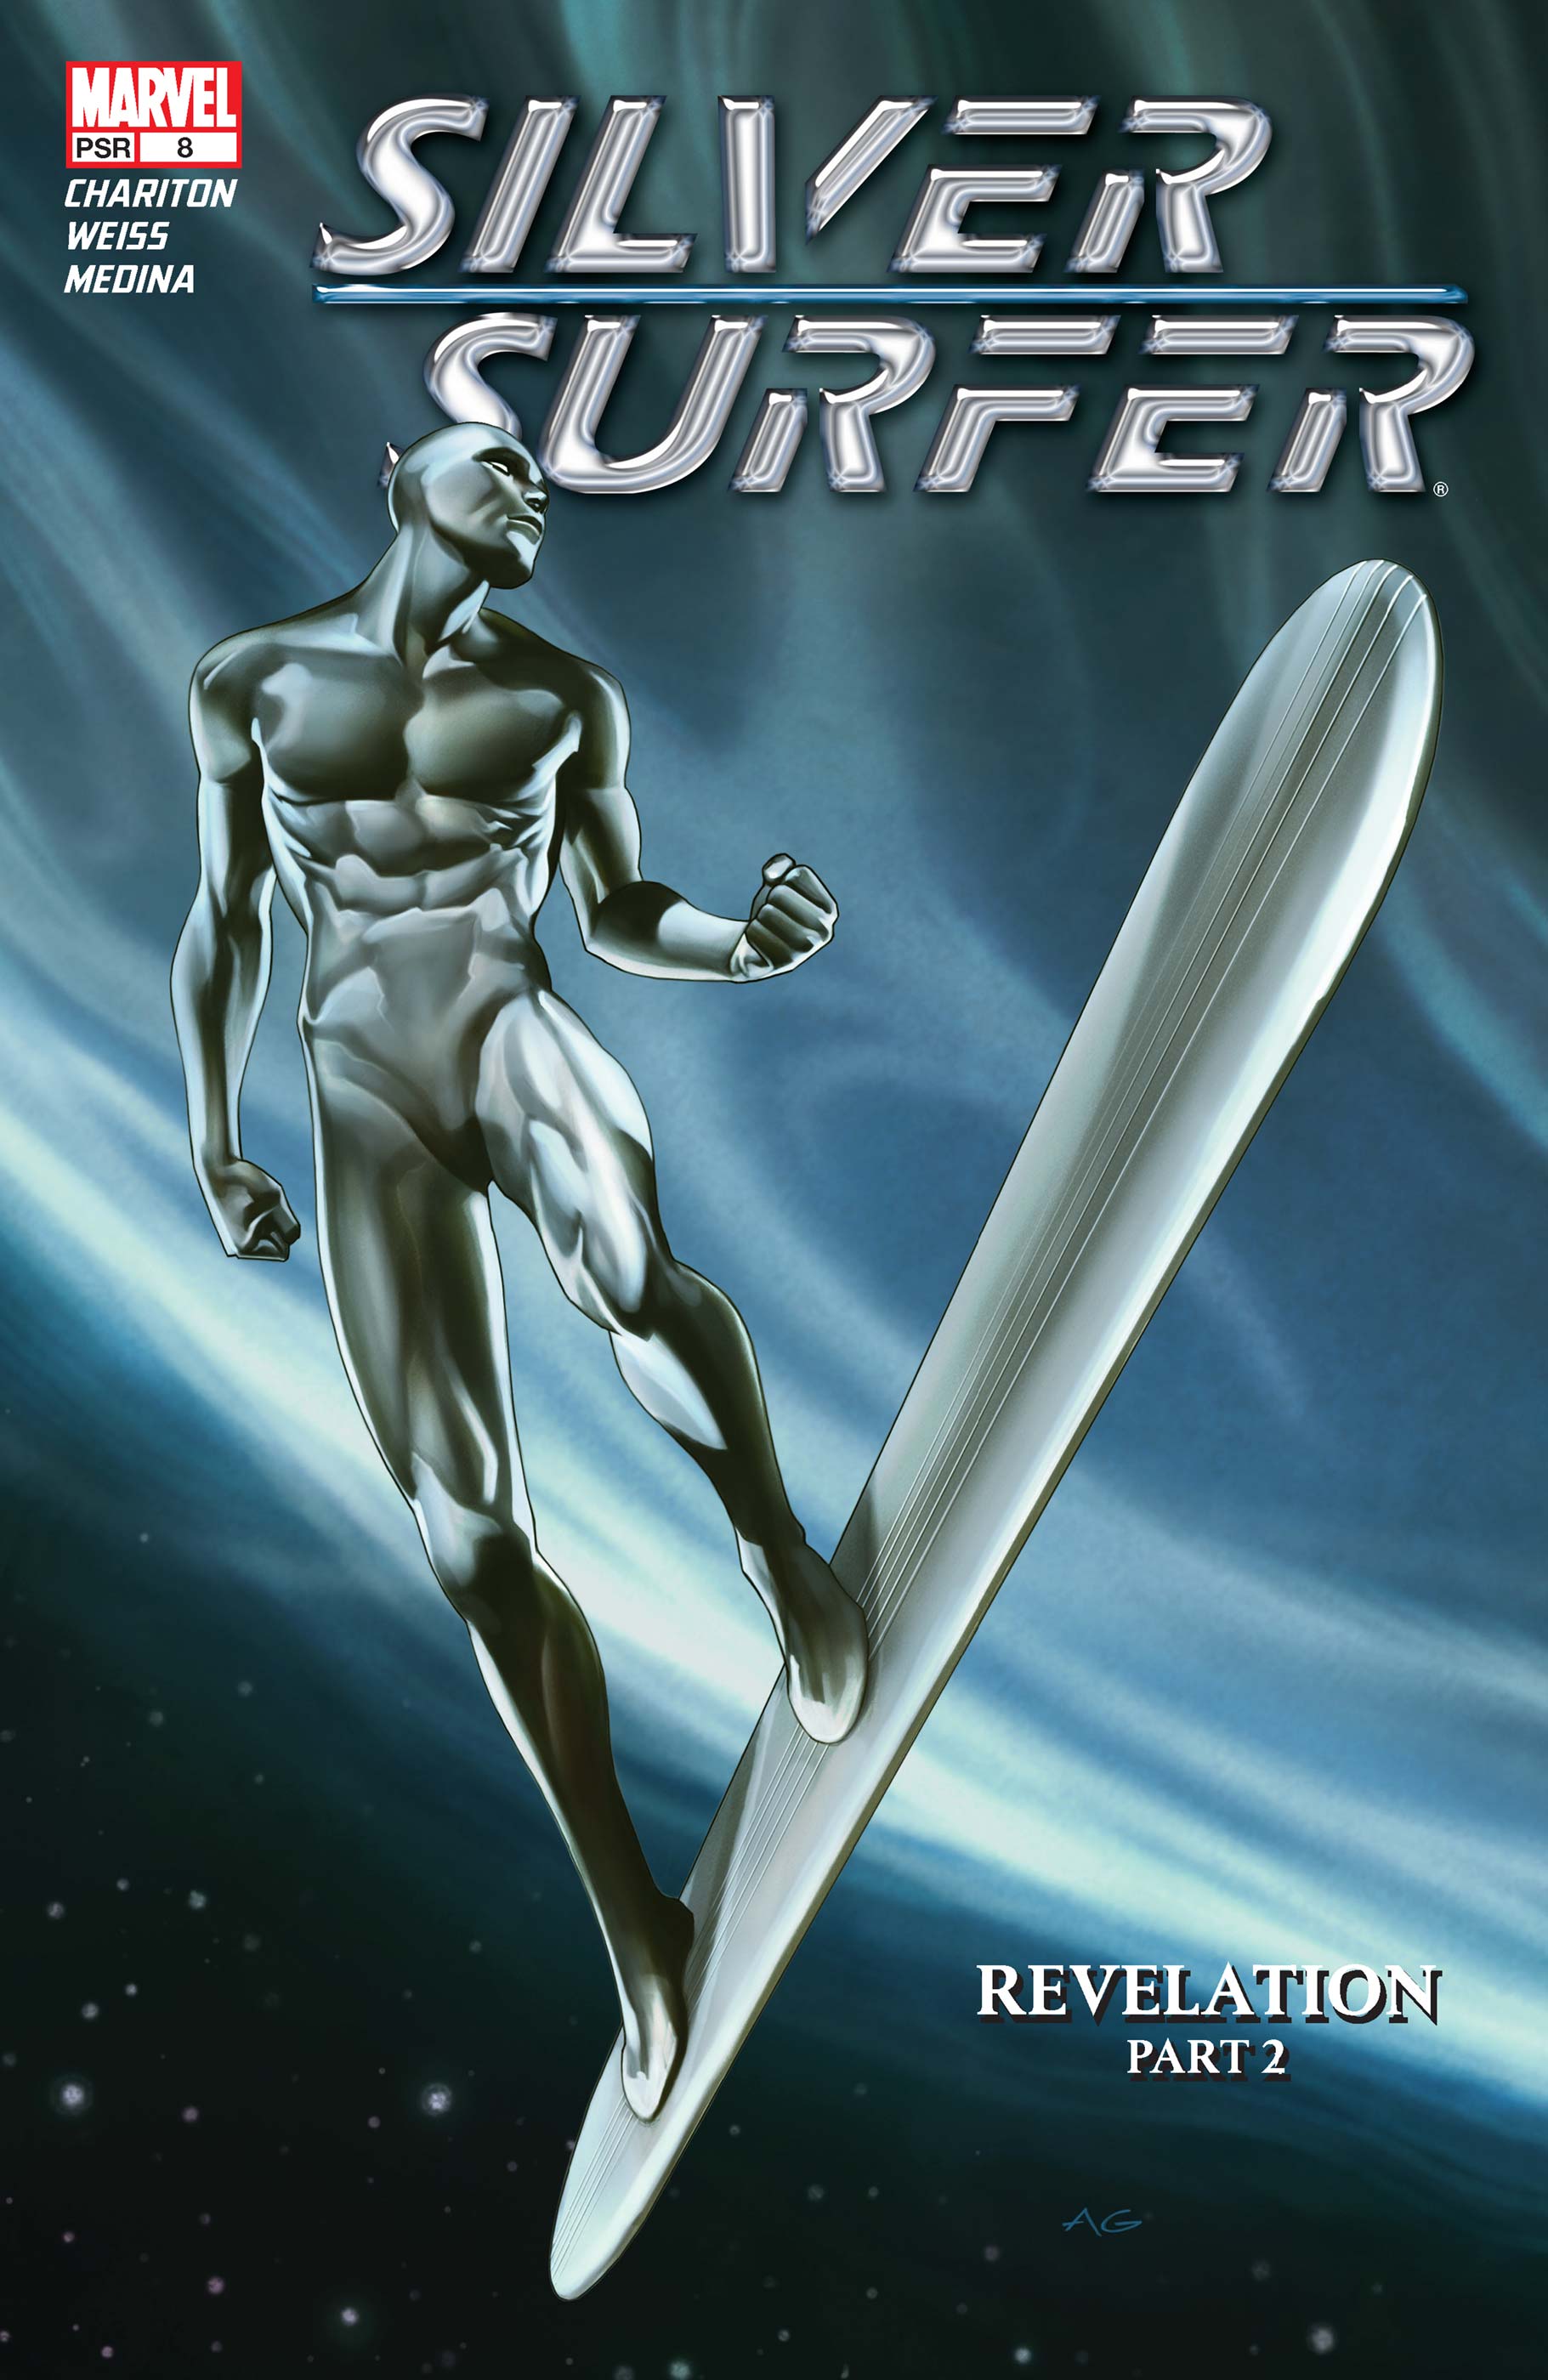 SILVER SURFER #7#8 - MARVEL COMICS (2004)